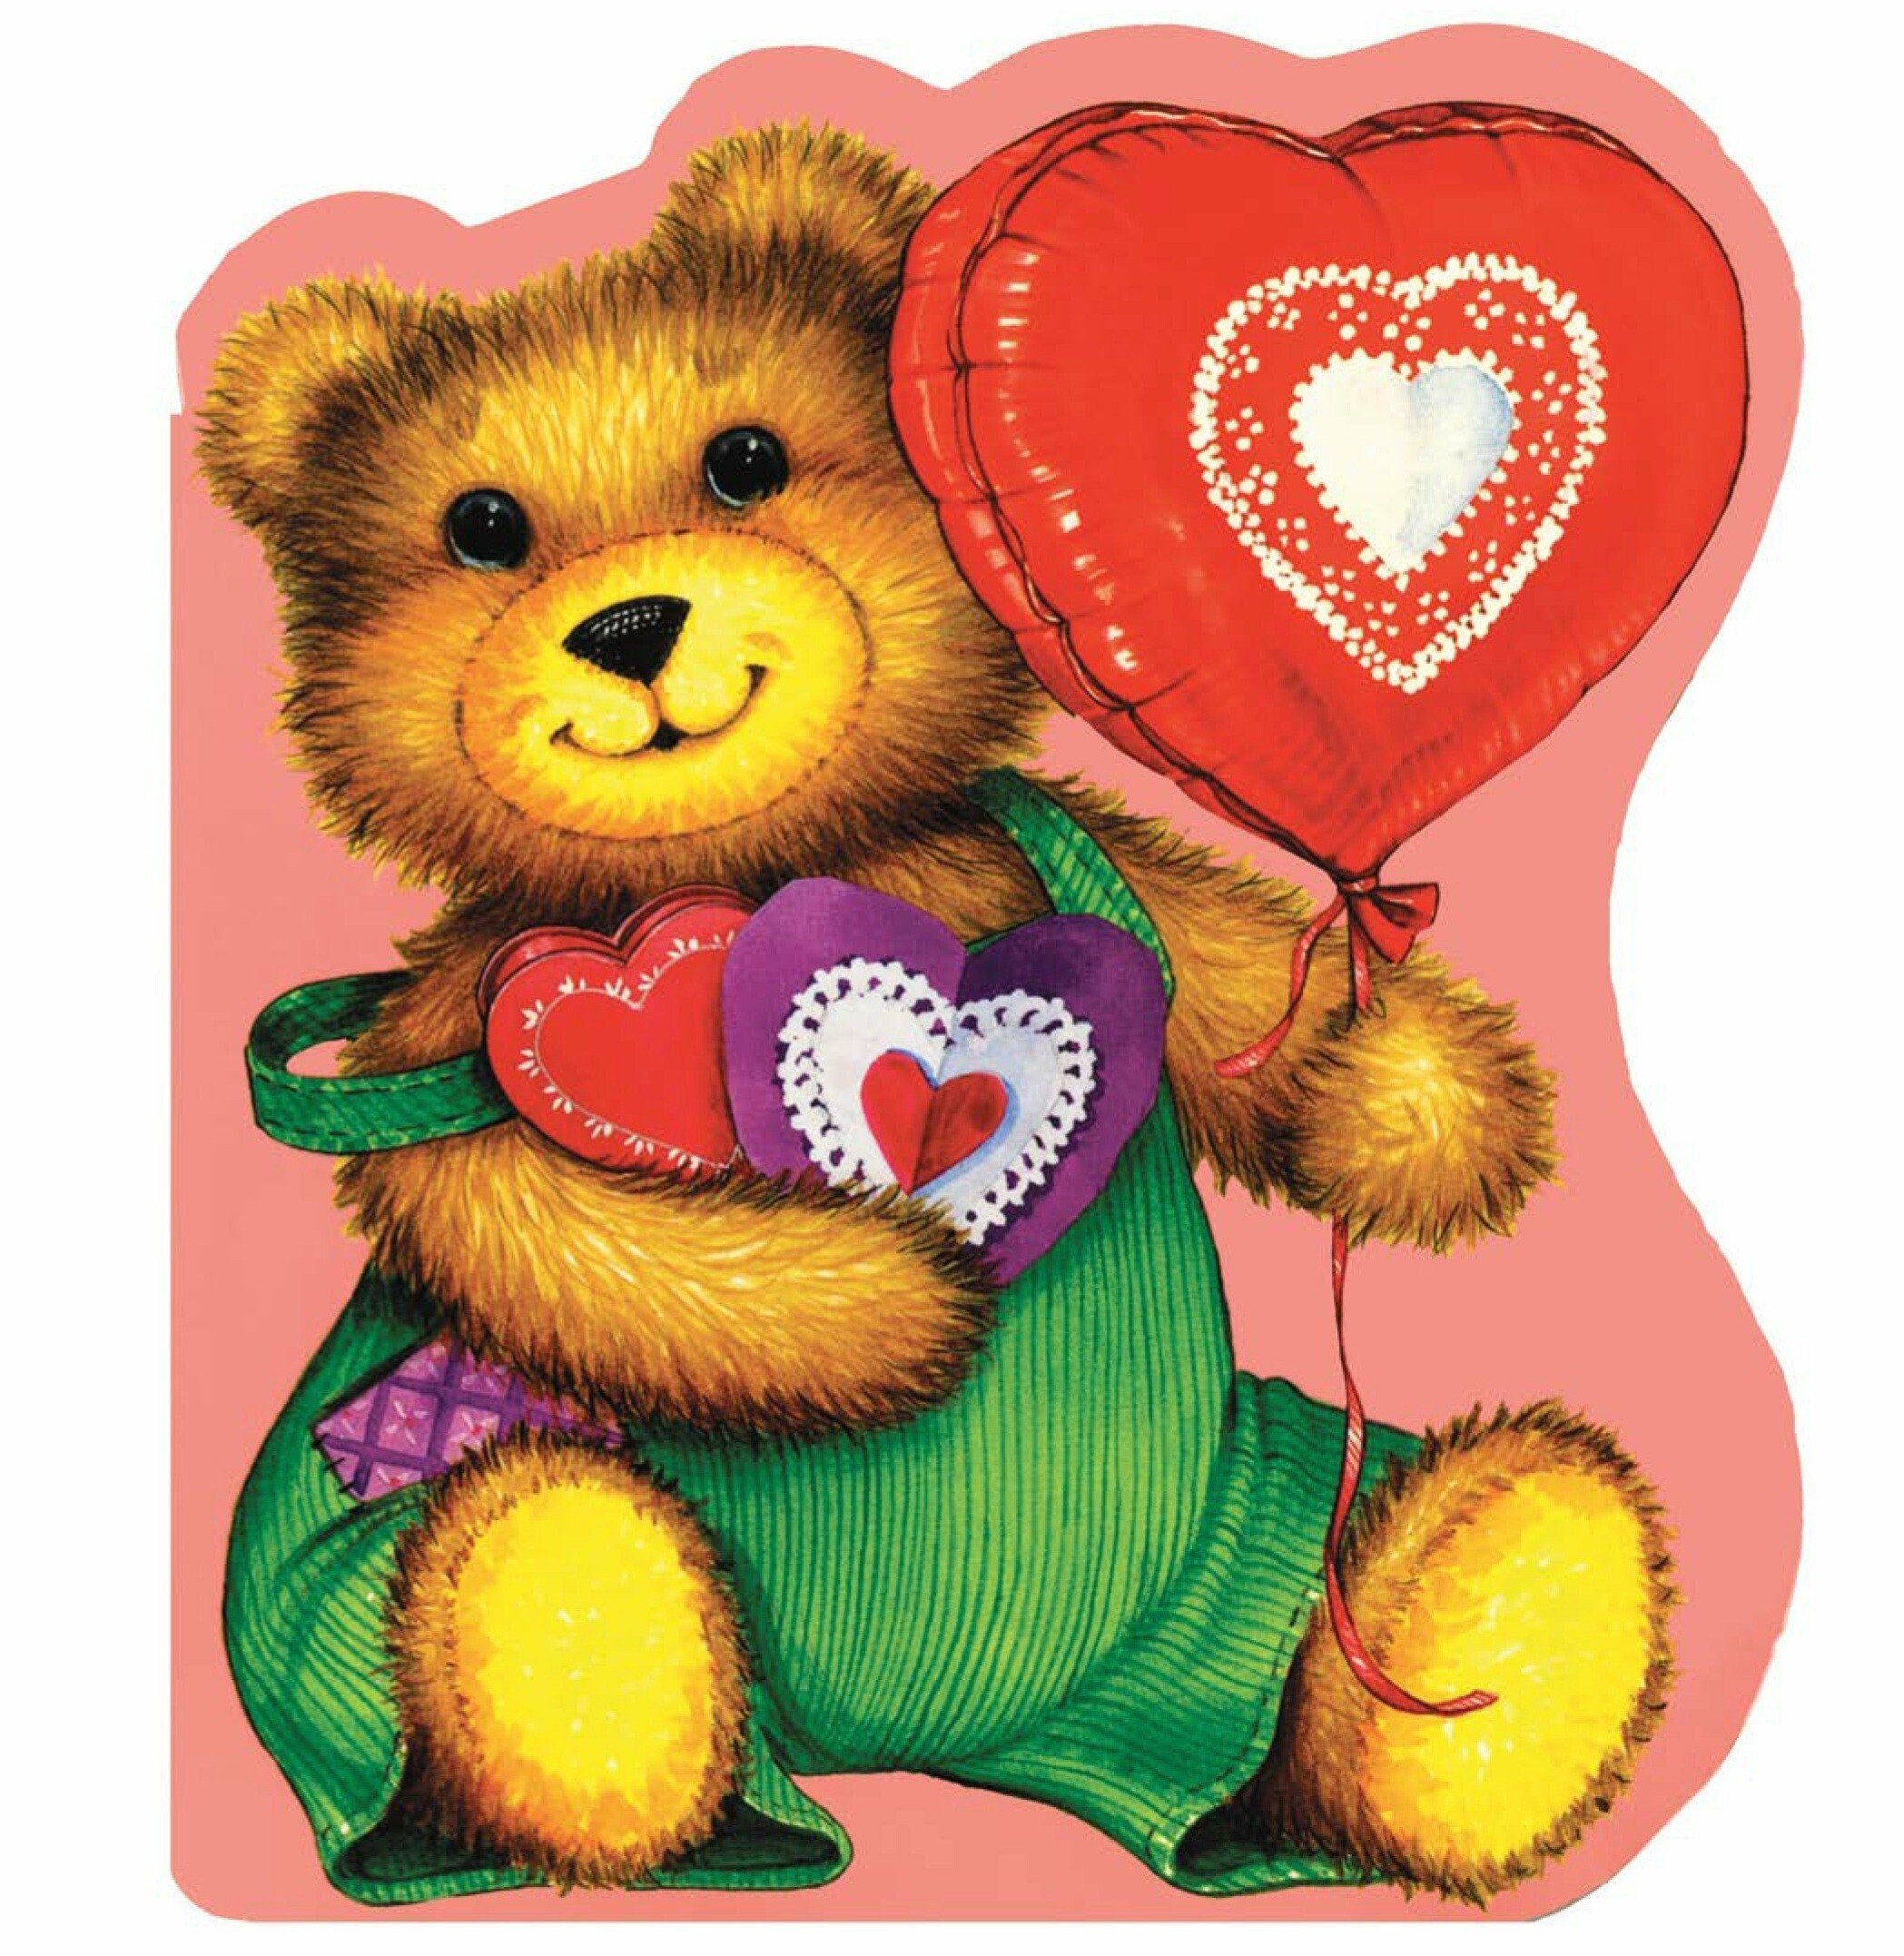 A bear holding a heart balloon and heart cards 